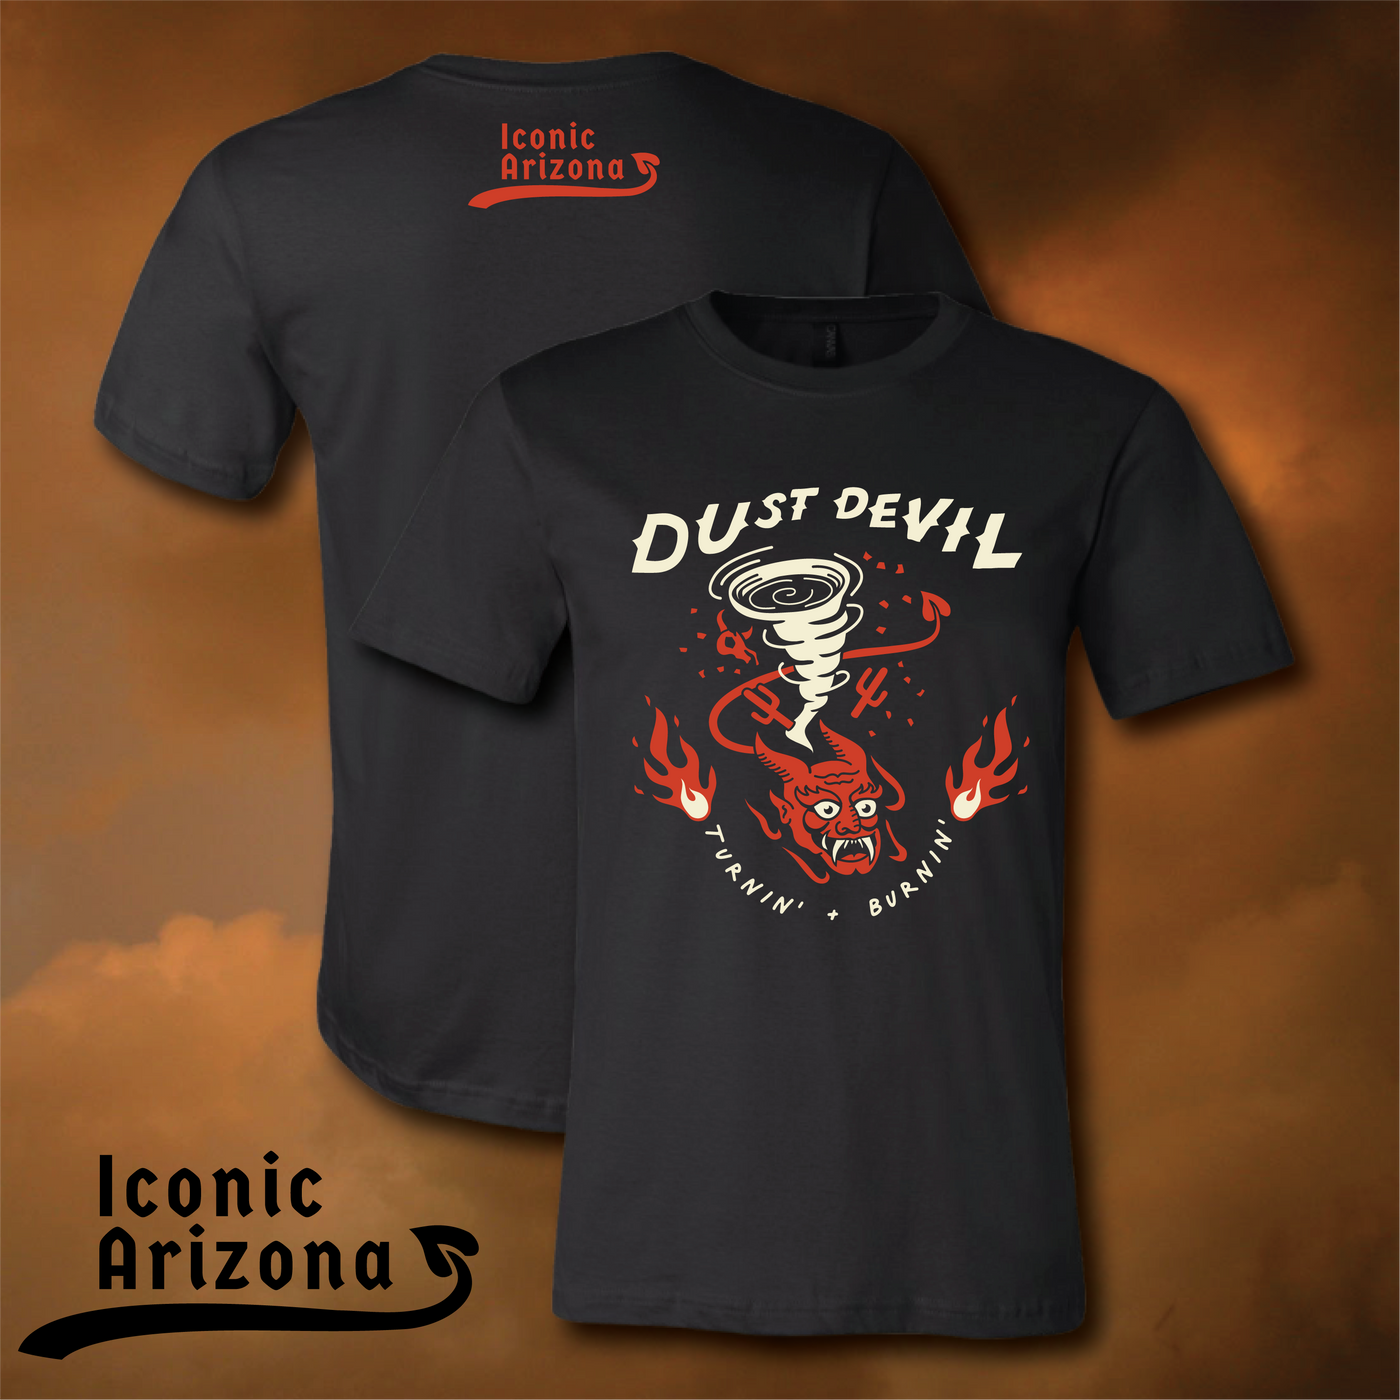 Iconic Arizona Dust Devil Tee